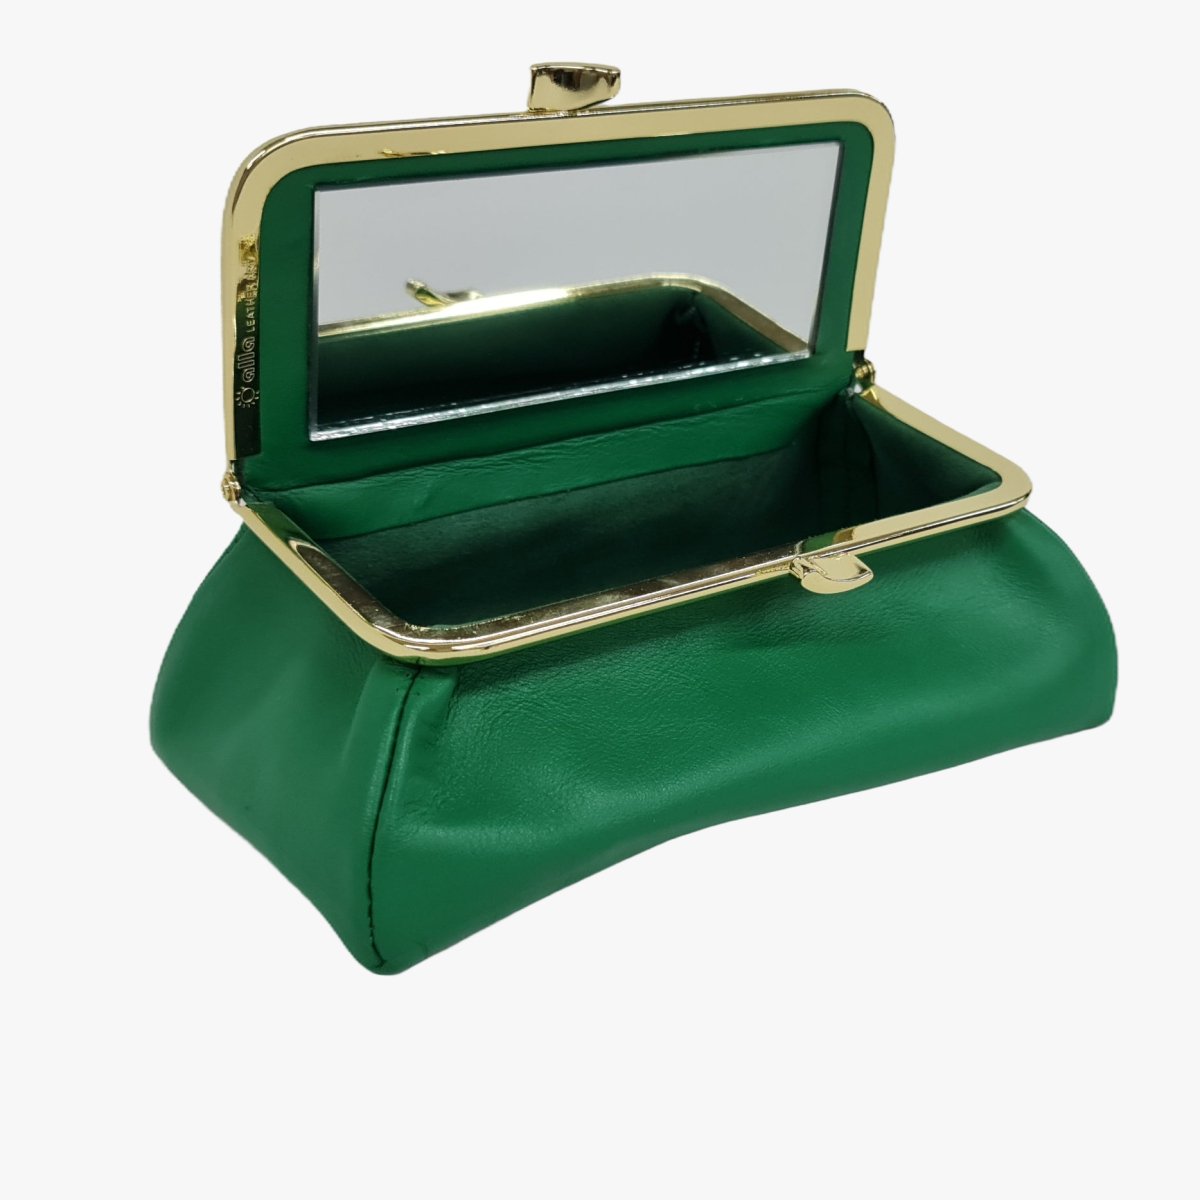 Grass Green Genuine Leather Travel Bag - Marina Korneev